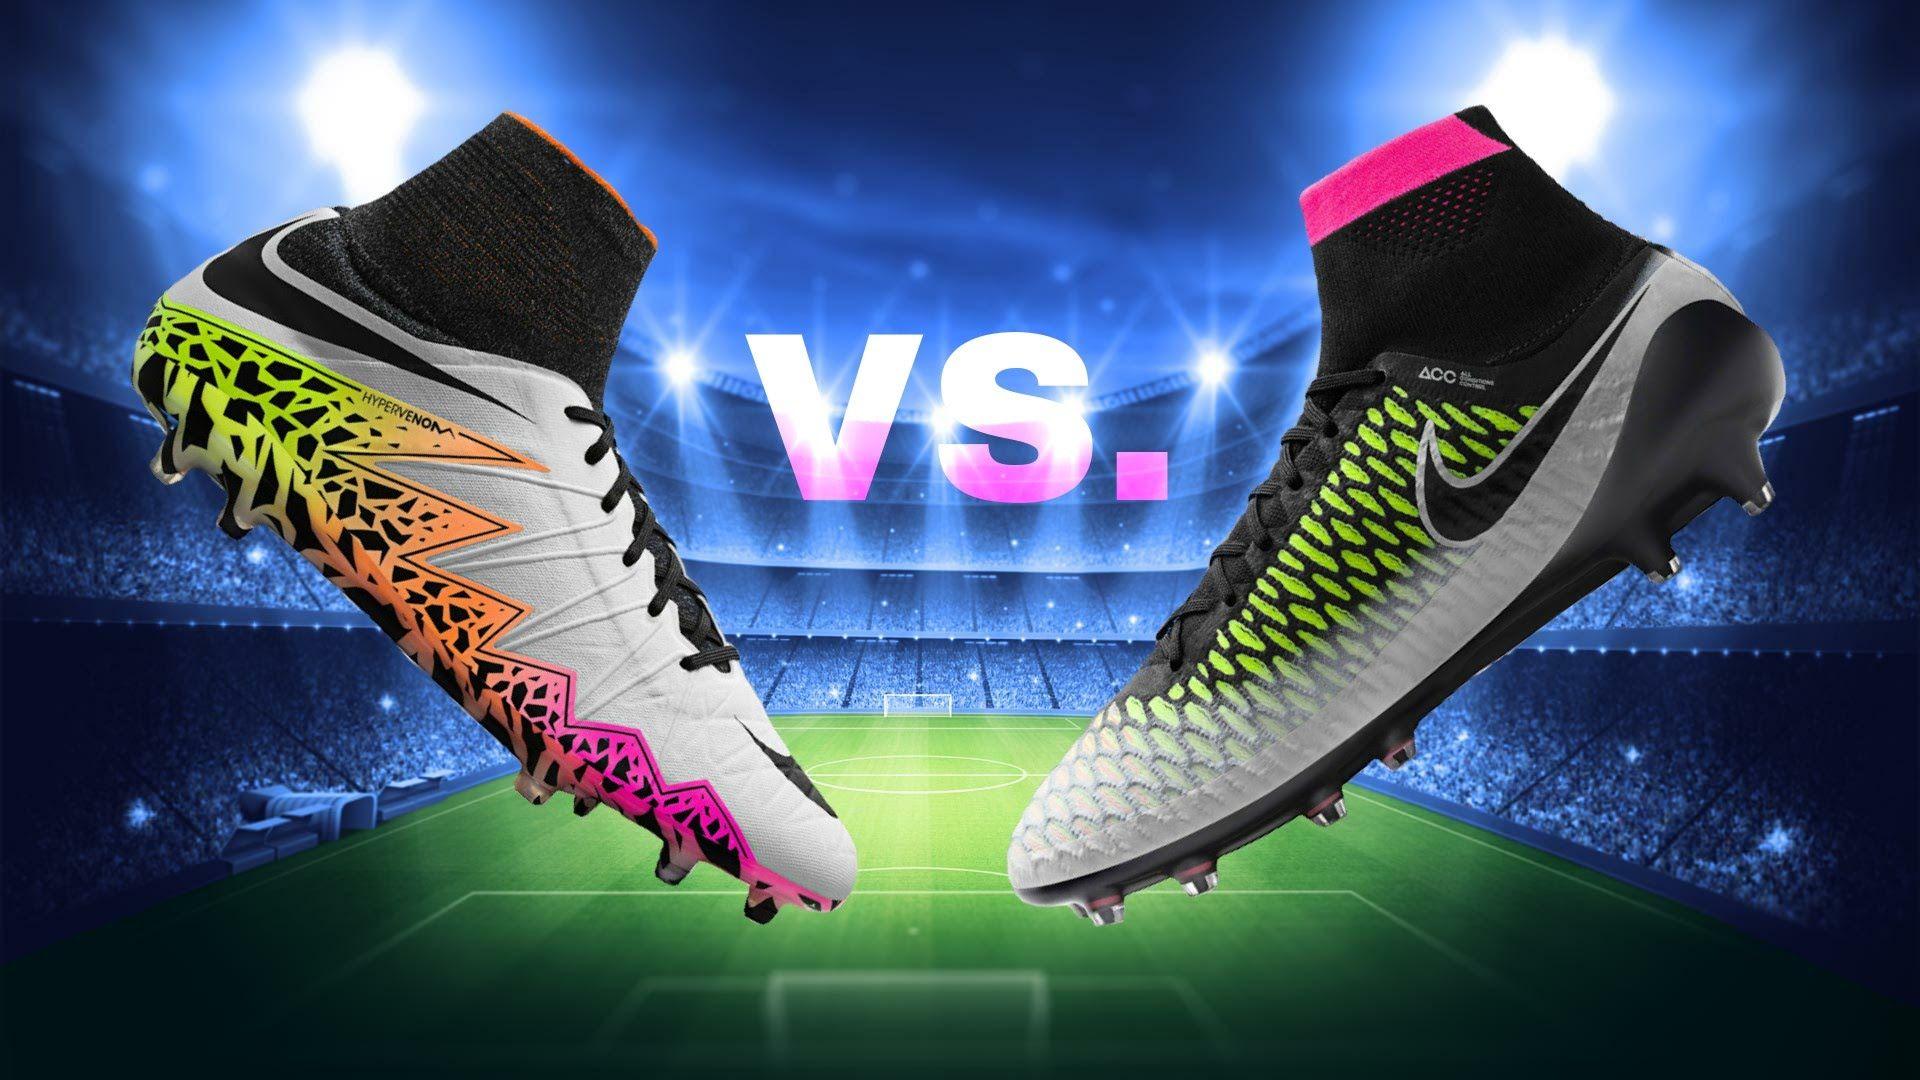 Hypervenom VS. Magista Obra. Nike Radiant Reveal Football Boot